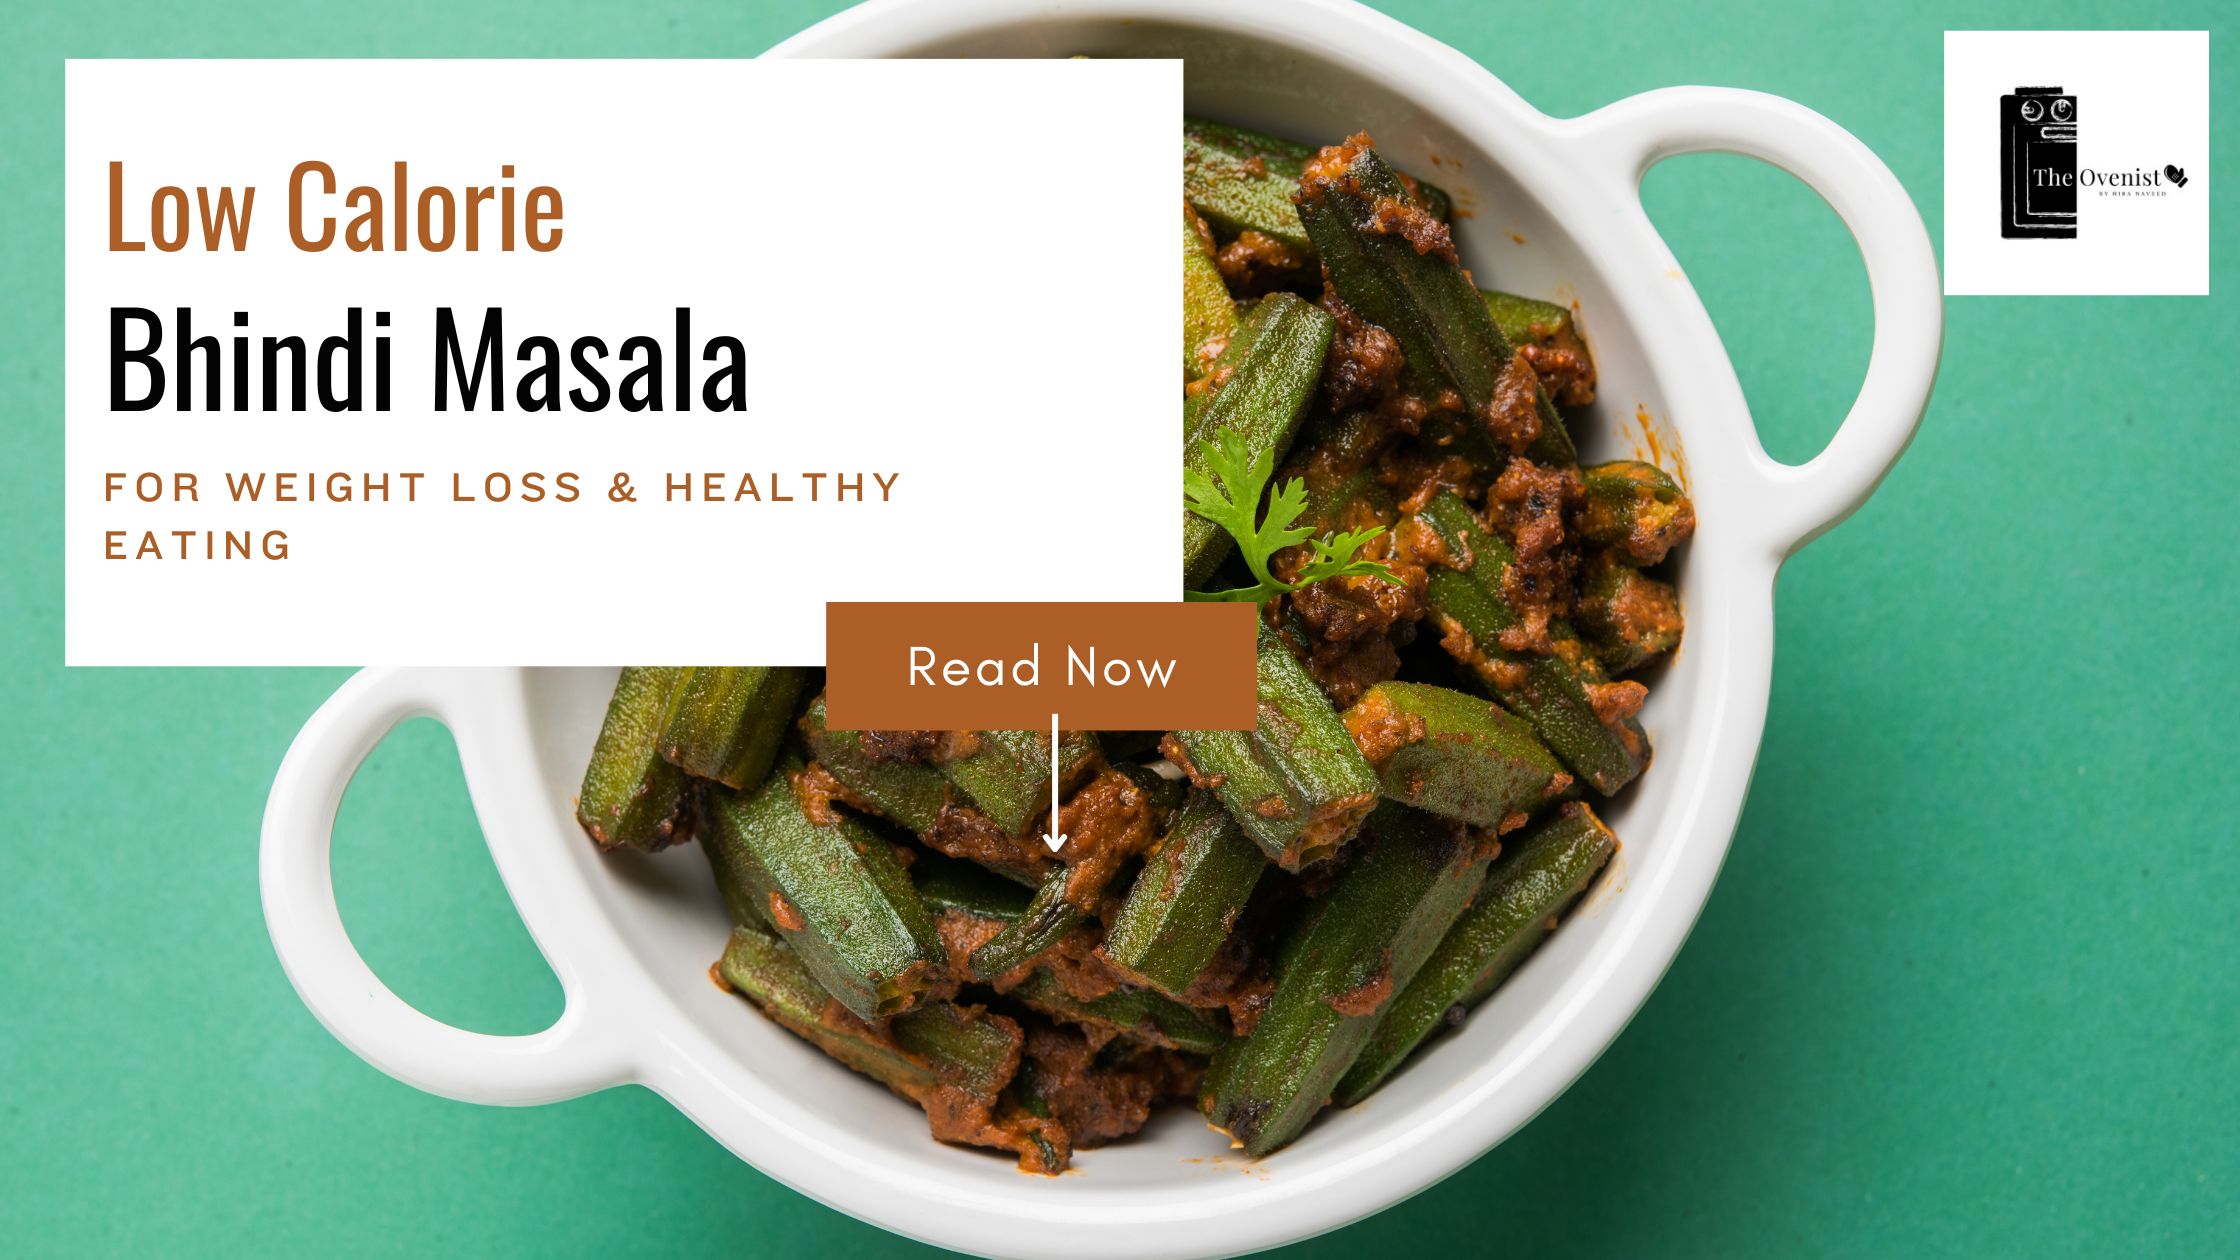 Low Calorie Bhindi Masala Recipe